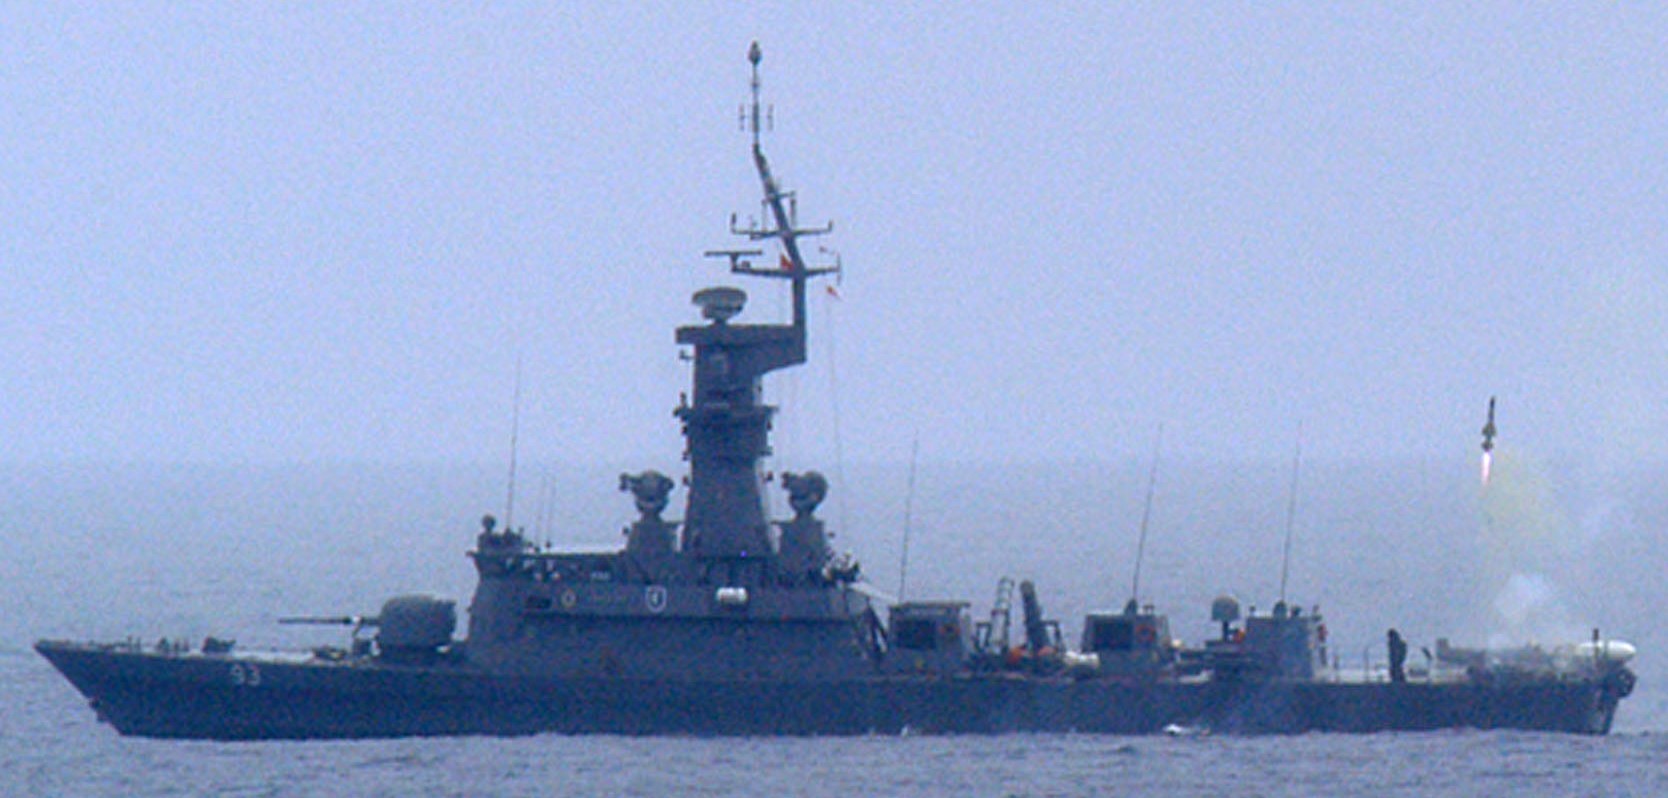 93 rss vengeance victory class missile corvette republic singapore navy iai barak sam 02